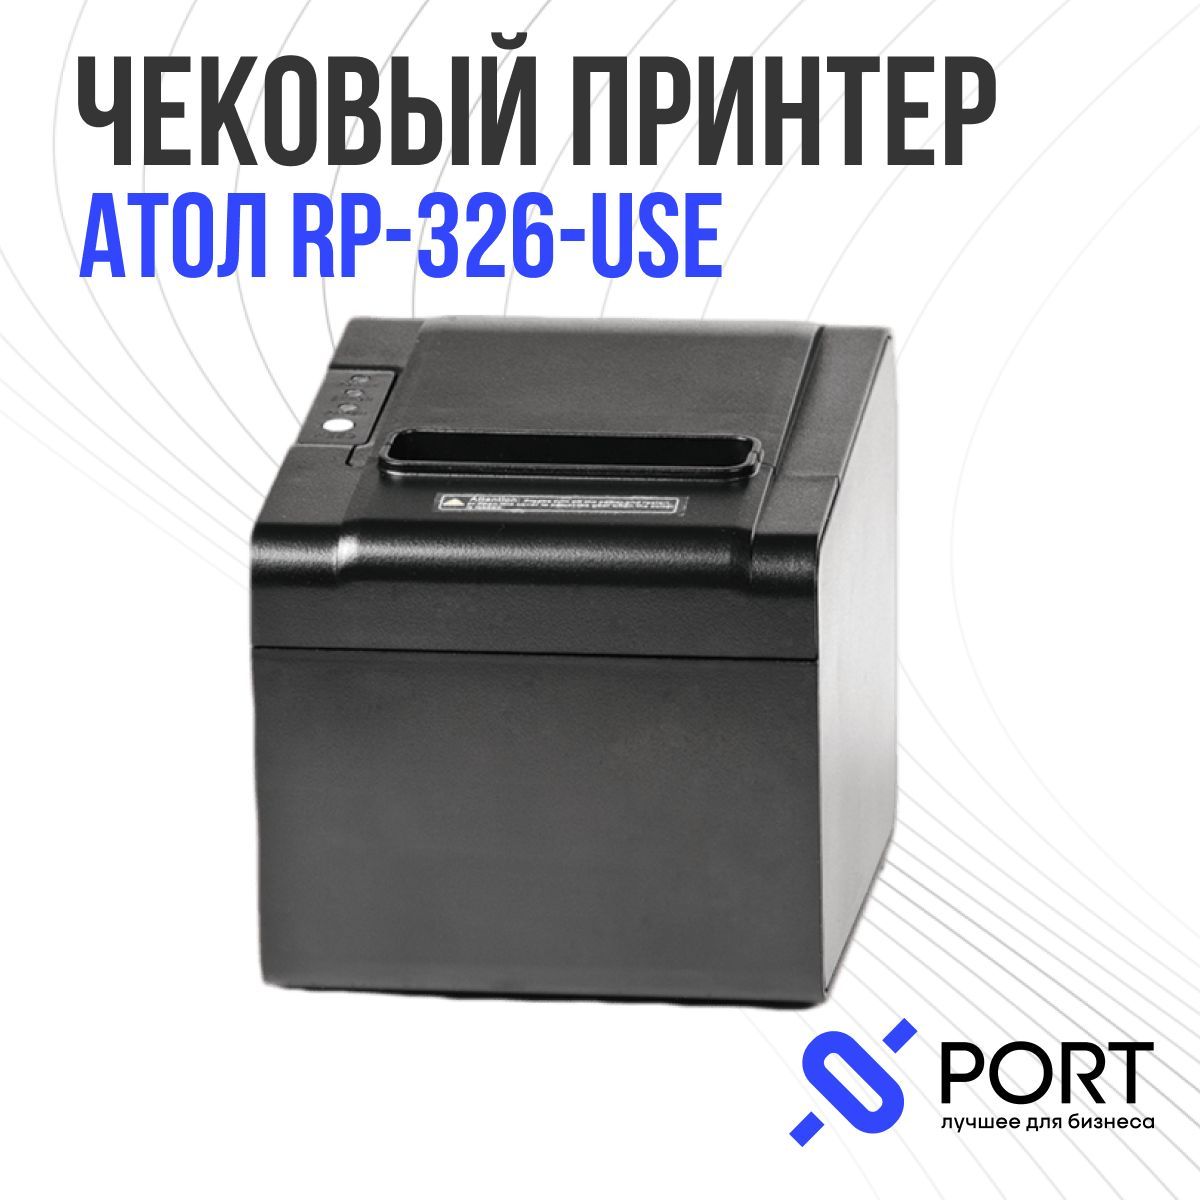 Принтер атол rp 326. Чековый принтер Атол rp326 use. Чек.принтер Атол 326. Чековый принтер Атол Rp-326-use, черный, БП.. Атол Rp 326 use разъемы.